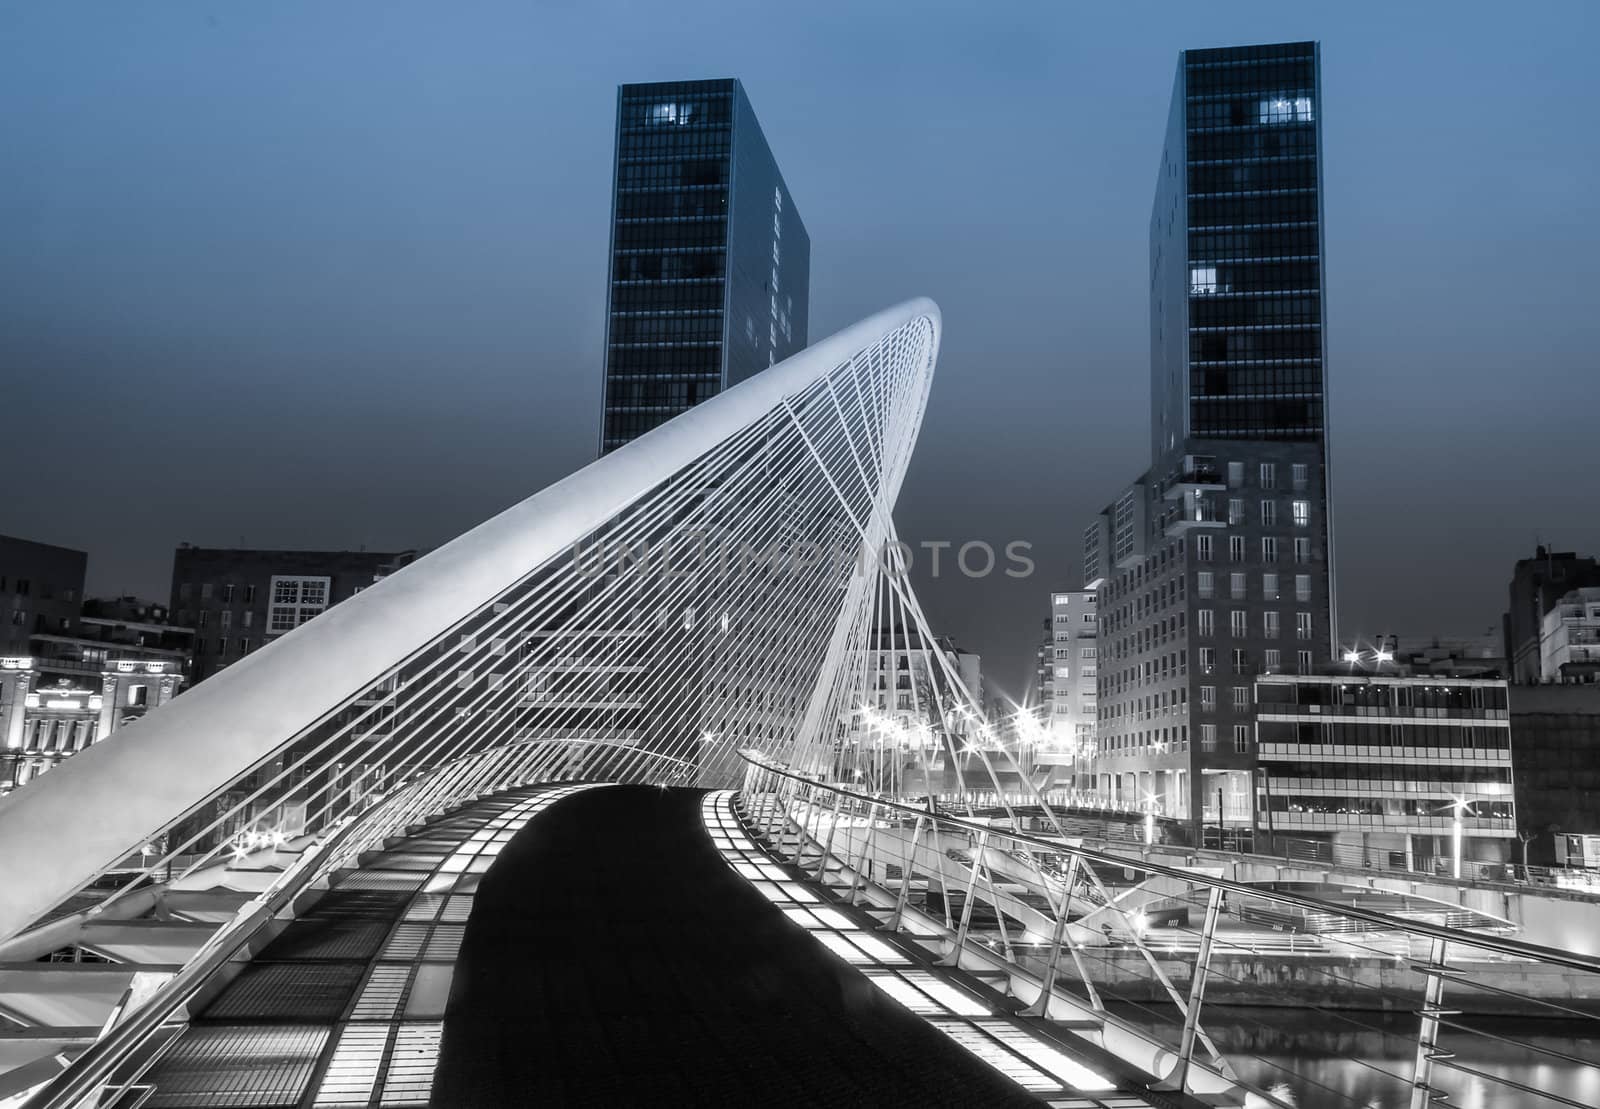 Nightview of Zubizuri bridge and Isozaki towers in Bilbao, Spain by doble.d